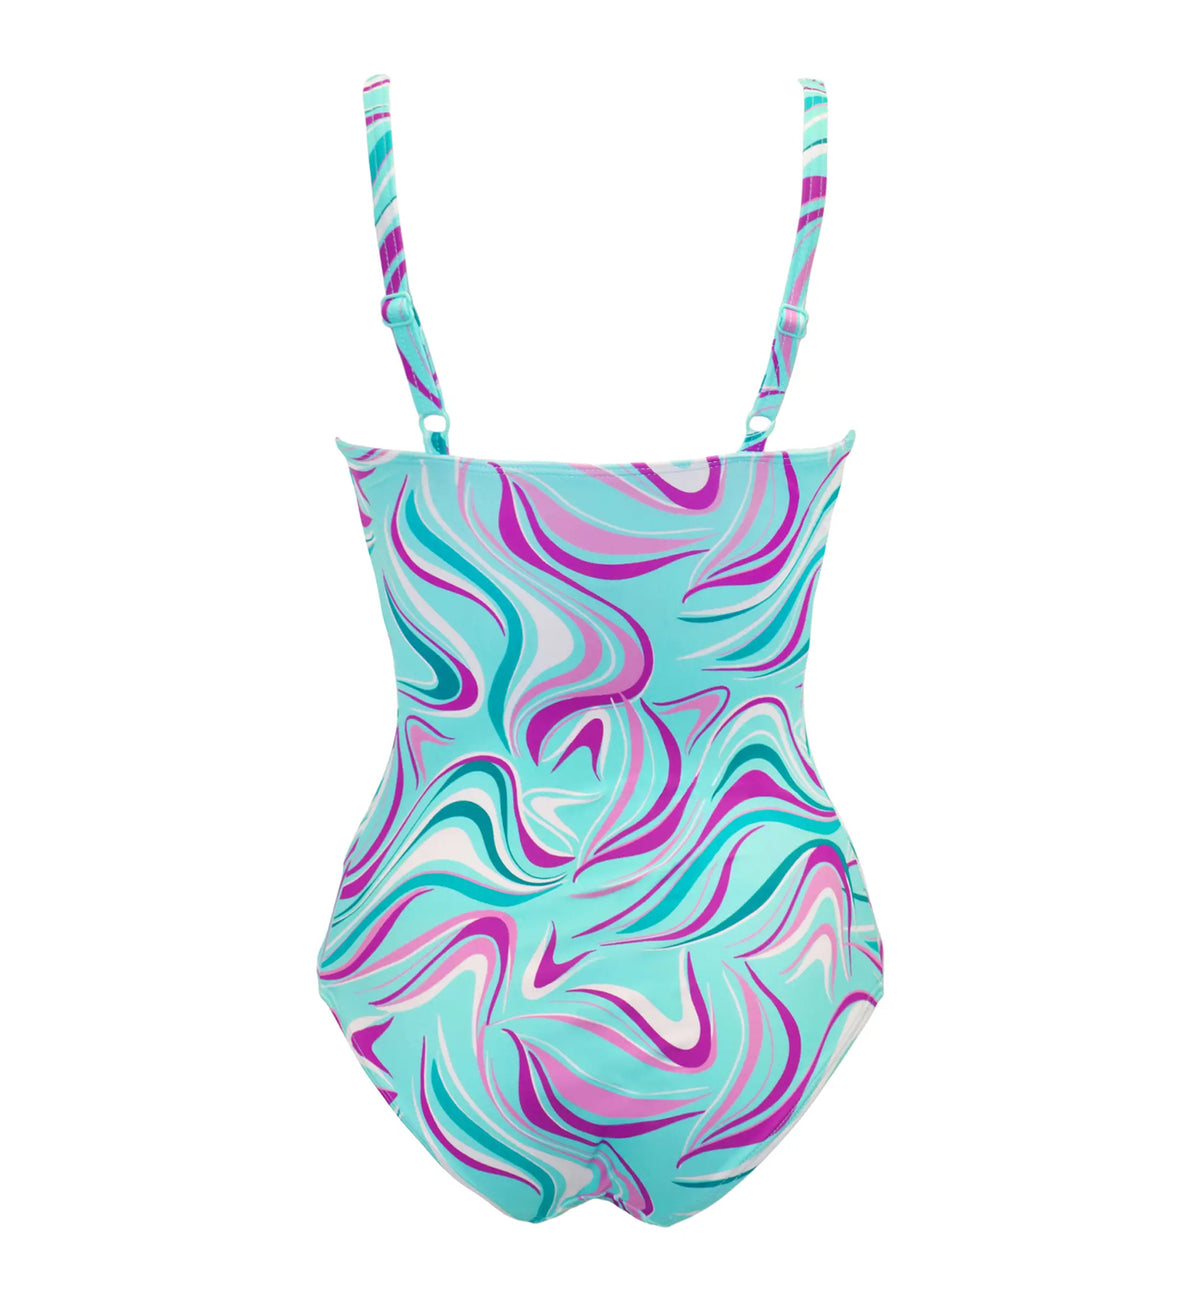 Pour Moi Carnival V Neck Tummy Control Swimsuit (25614),Medium,Aquaburst - Aquaburst,Medium